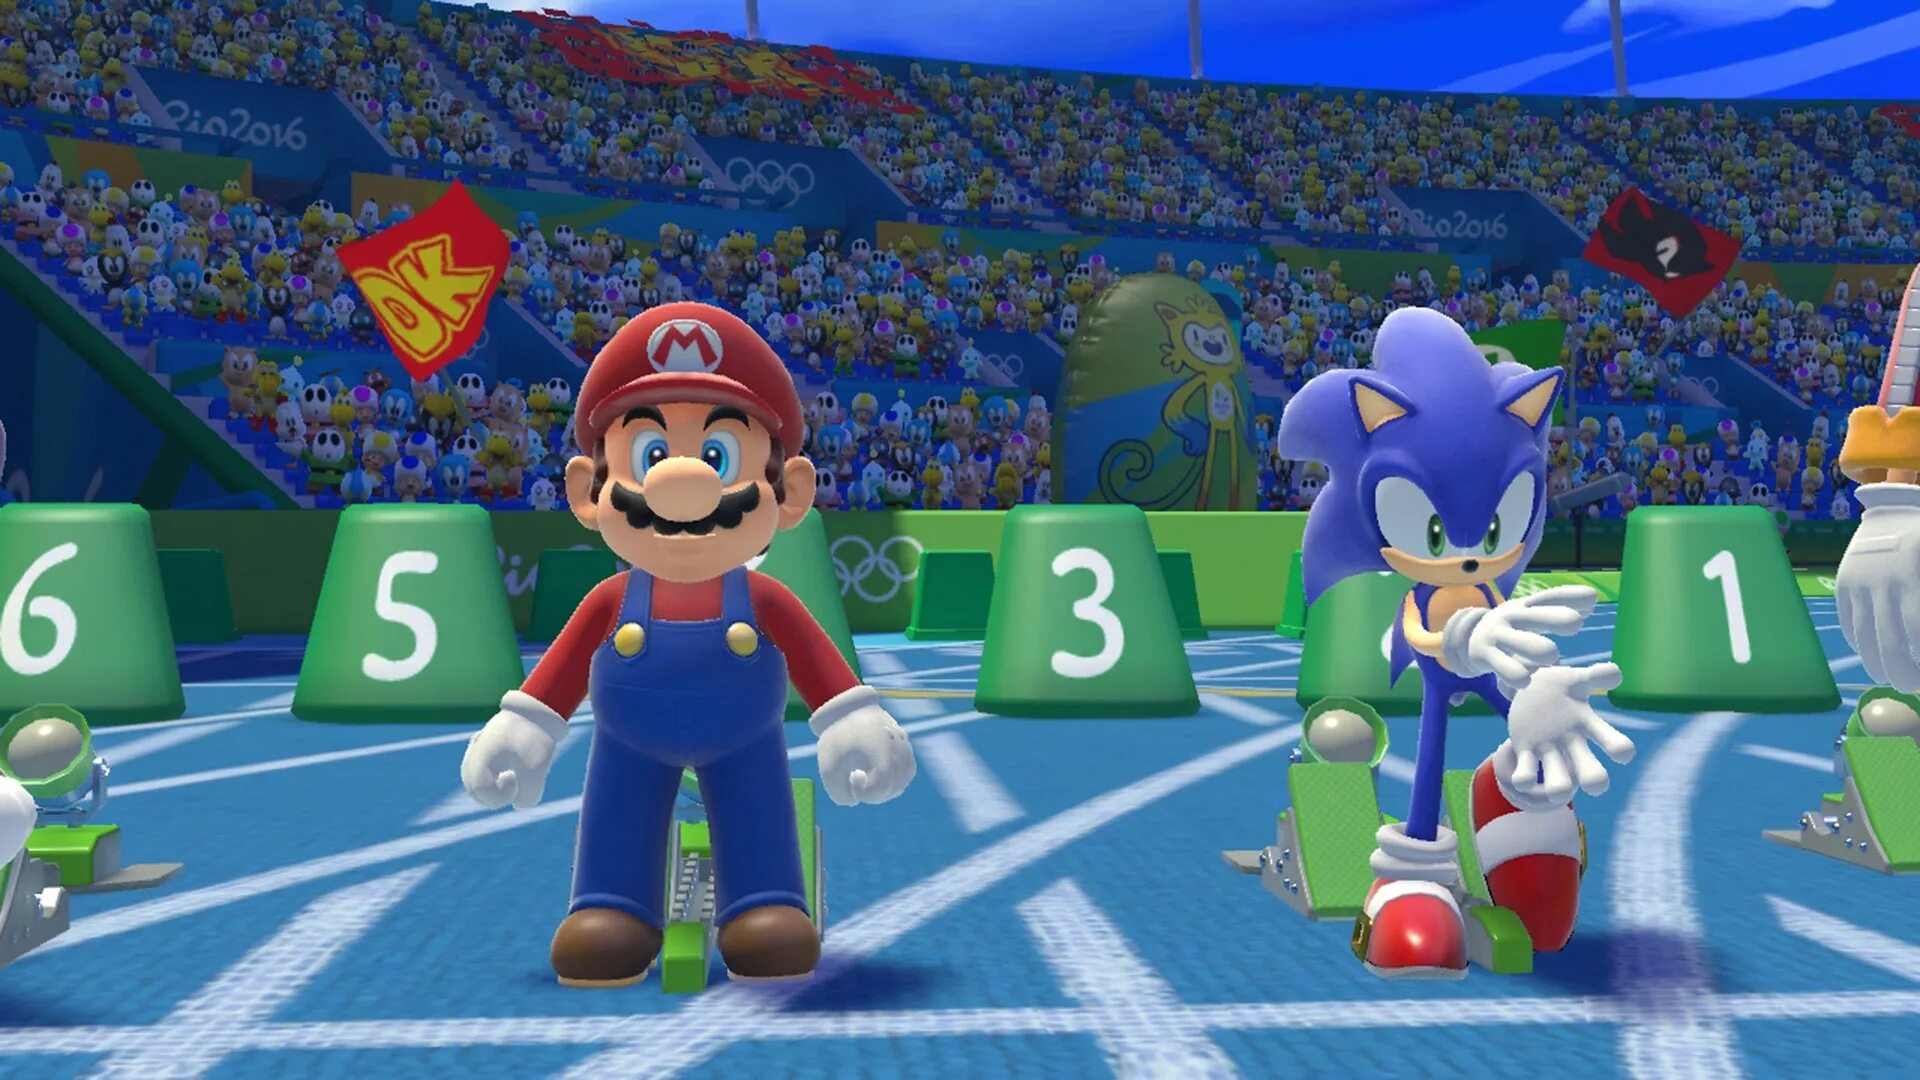 Mario & Sonic at the Olympic games. Марио и Соник на Олимпийских играх 2016. Mario & Sonic at the Rio 2016 Olympic games. Mario and Sonic at the Rio 2016 Olympic games Wii u.